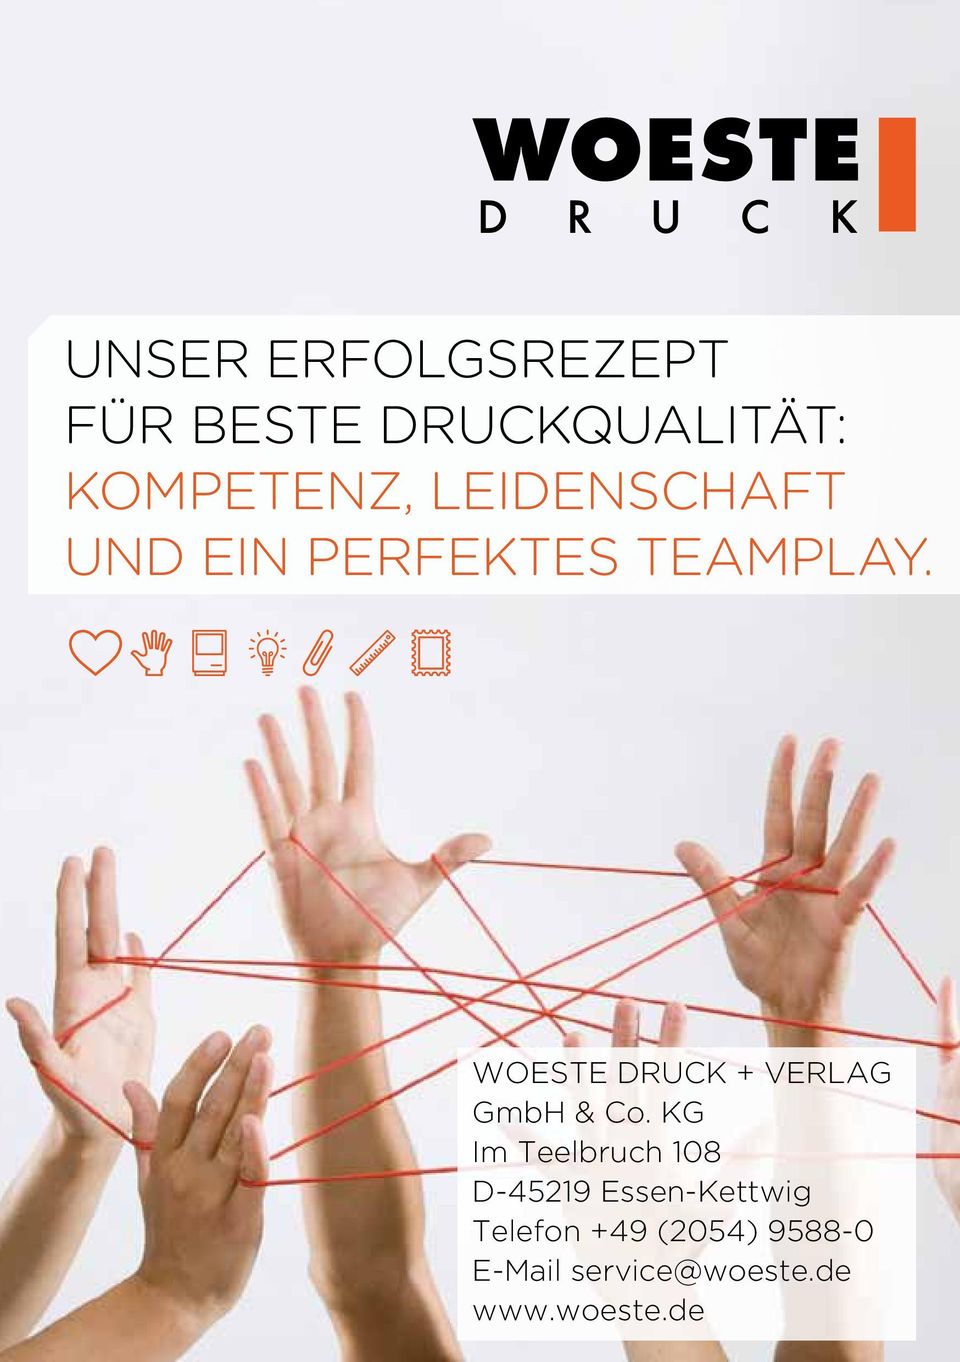 WOESTE DRUCK + VERLAG GmbH & Co.